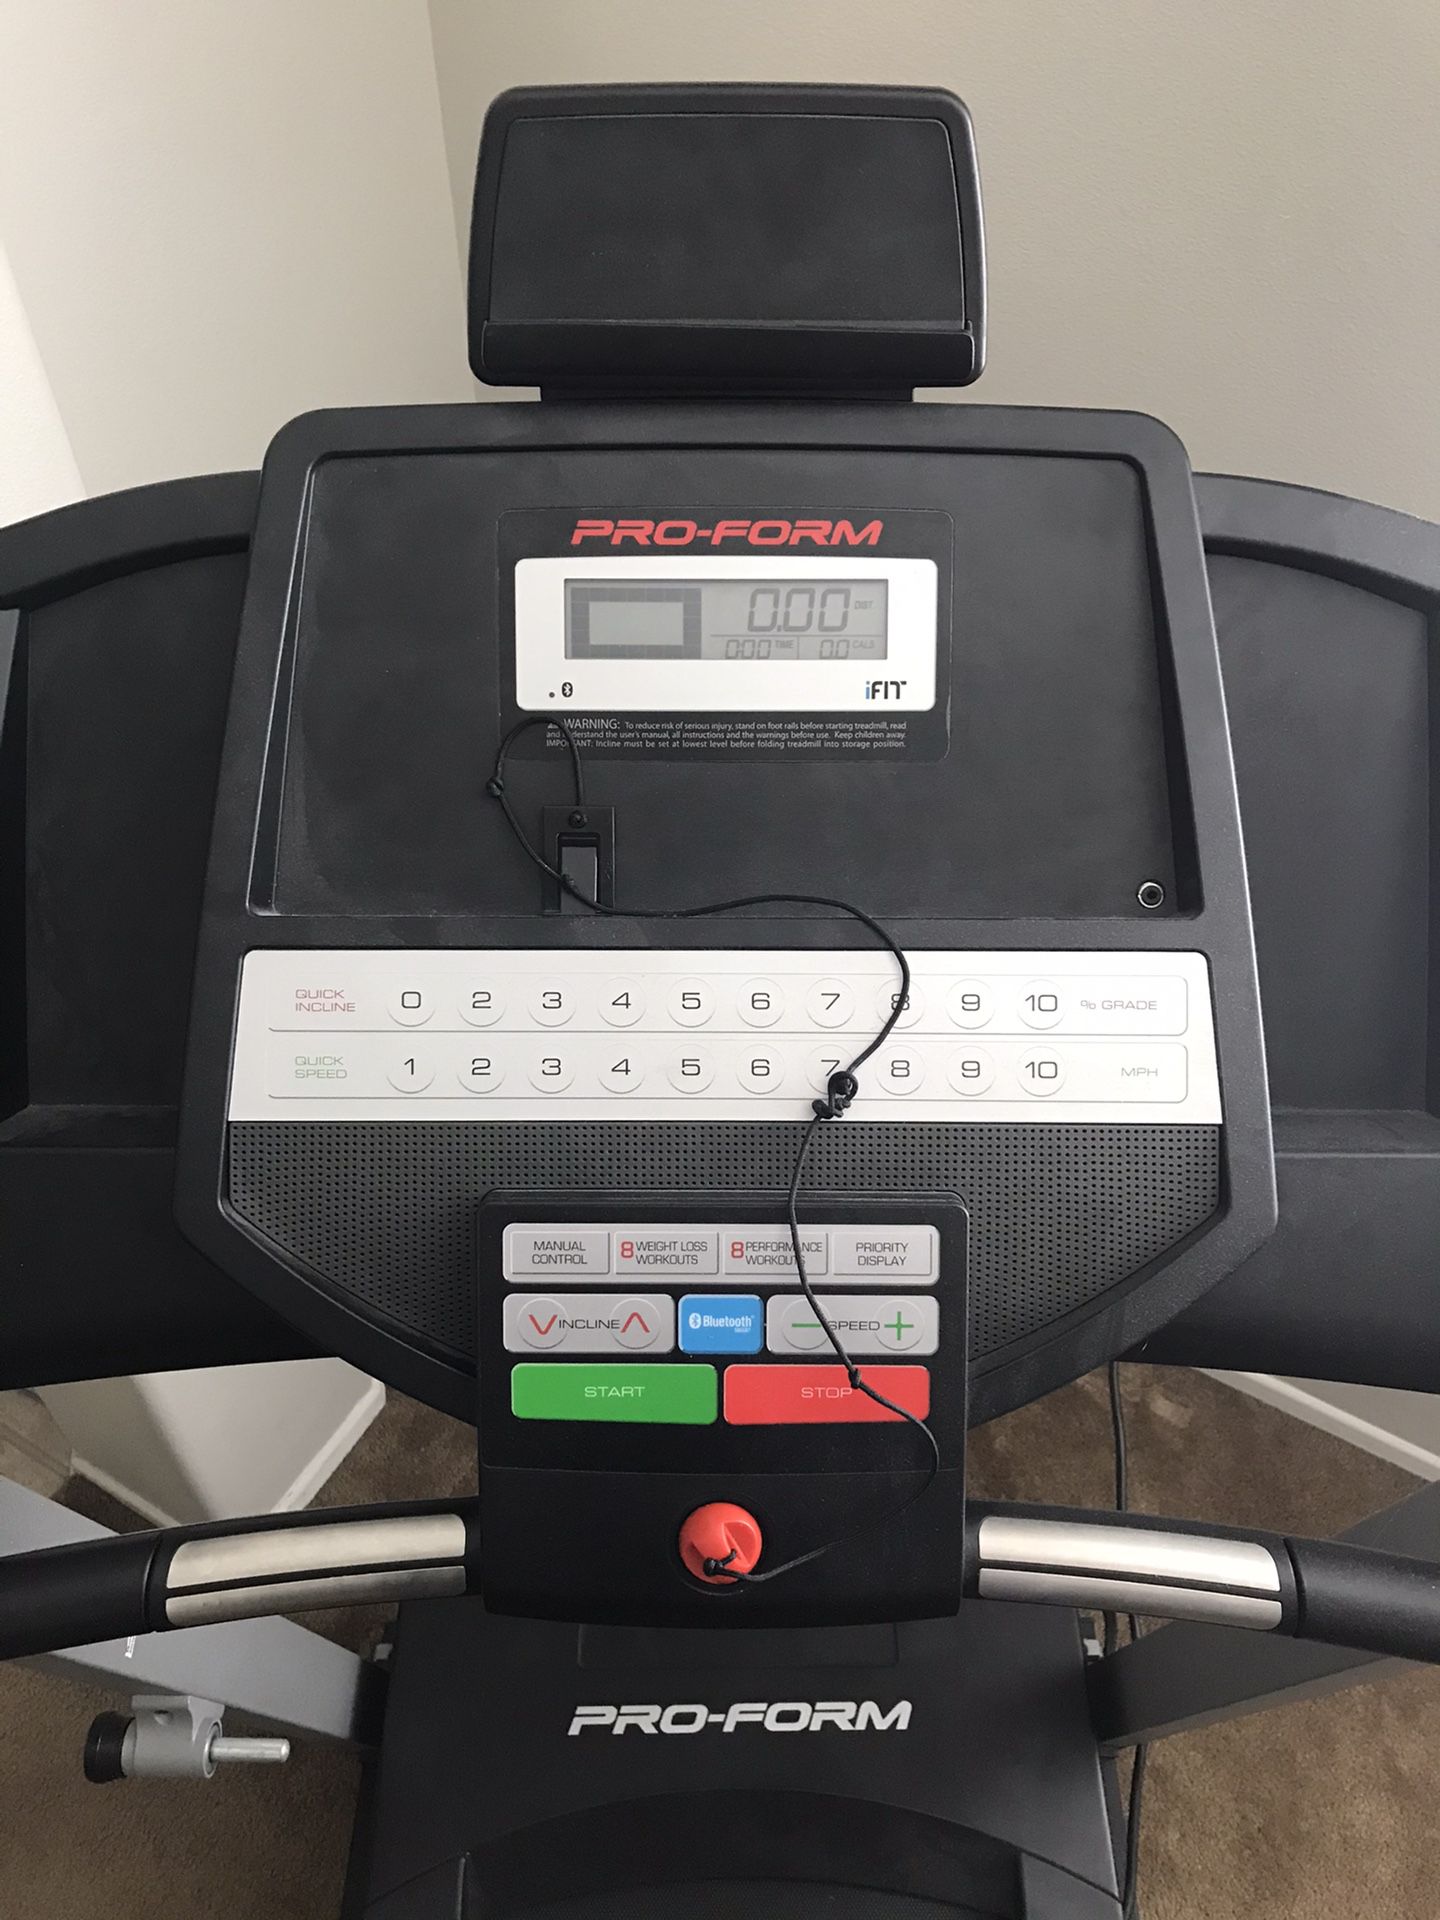 Pro-form Performance 300i treadmill